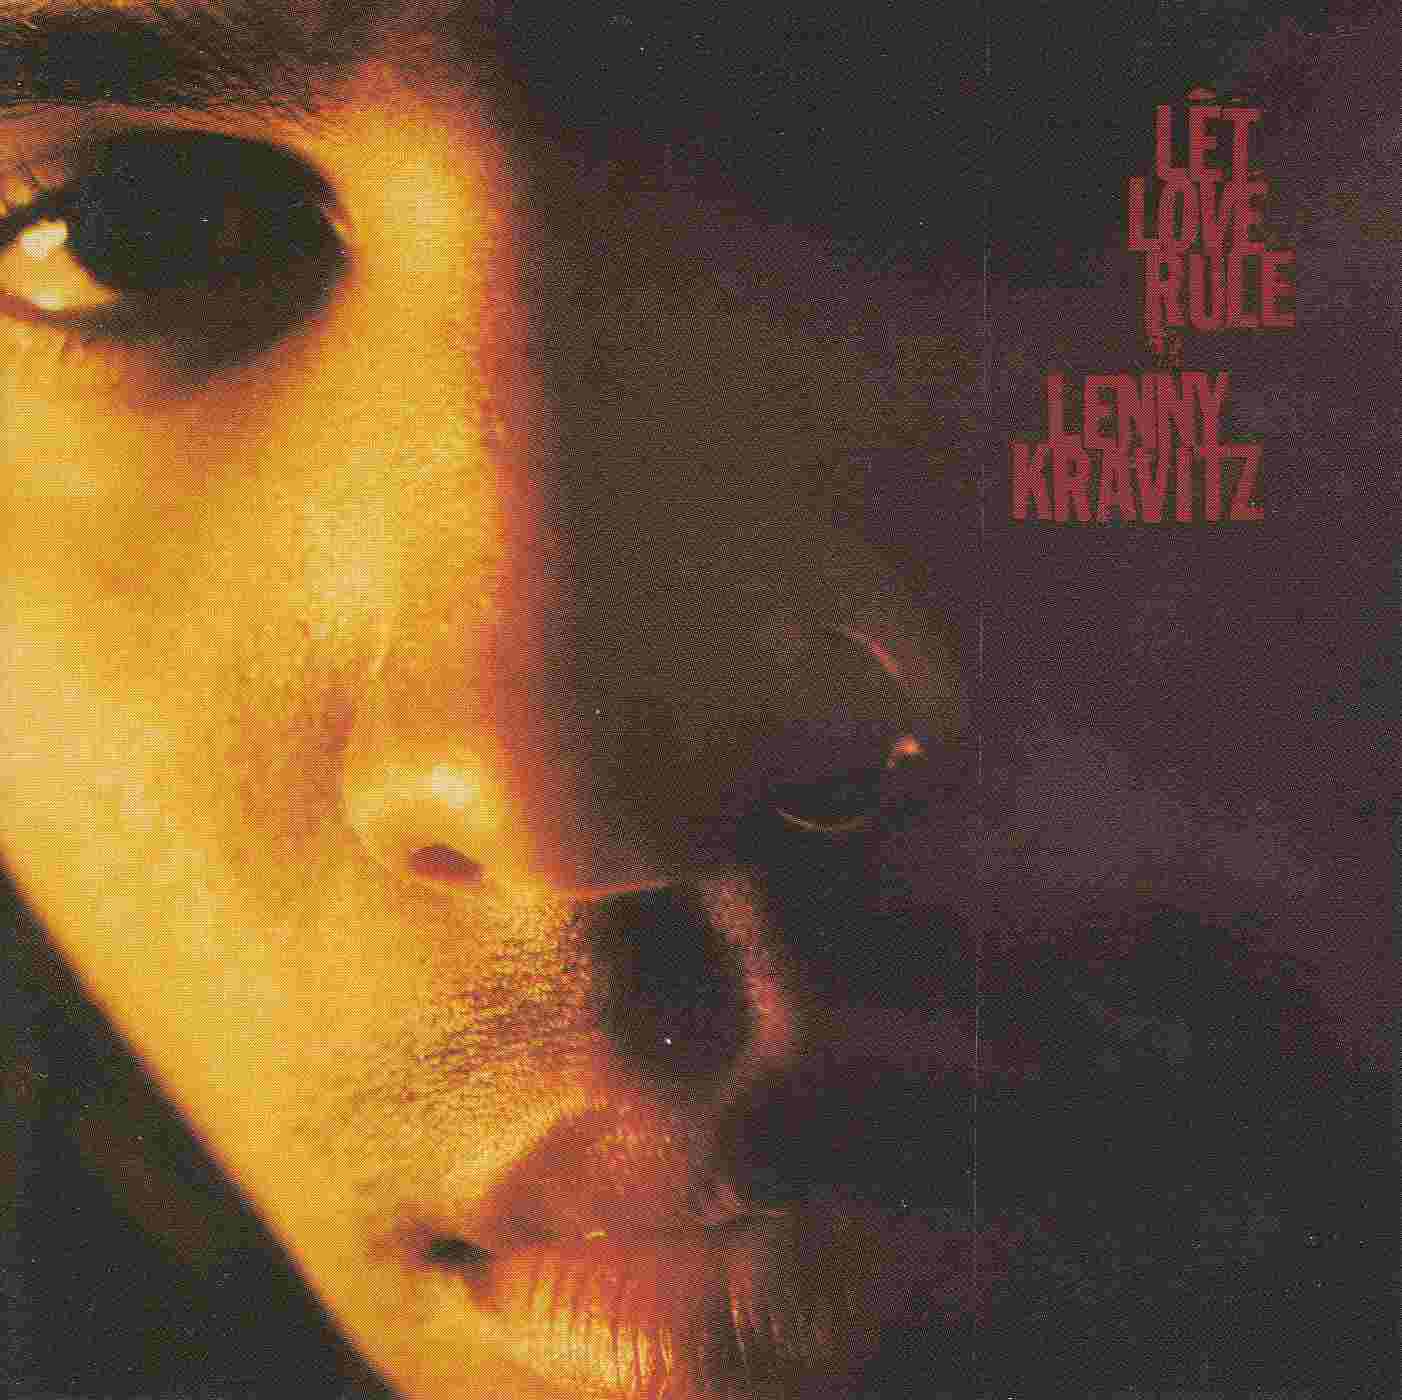 http://3.bp.blogspot.com/-AbS8ldutrdY/TdX8fg2hCFI/AAAAAAAAAC4/xzJ6WVEqEk8/s1600/Lenny+Kravitz+-+Let+Love+Rule+%252820th+Anniversary+Deluxe+Edition%2529.jpg